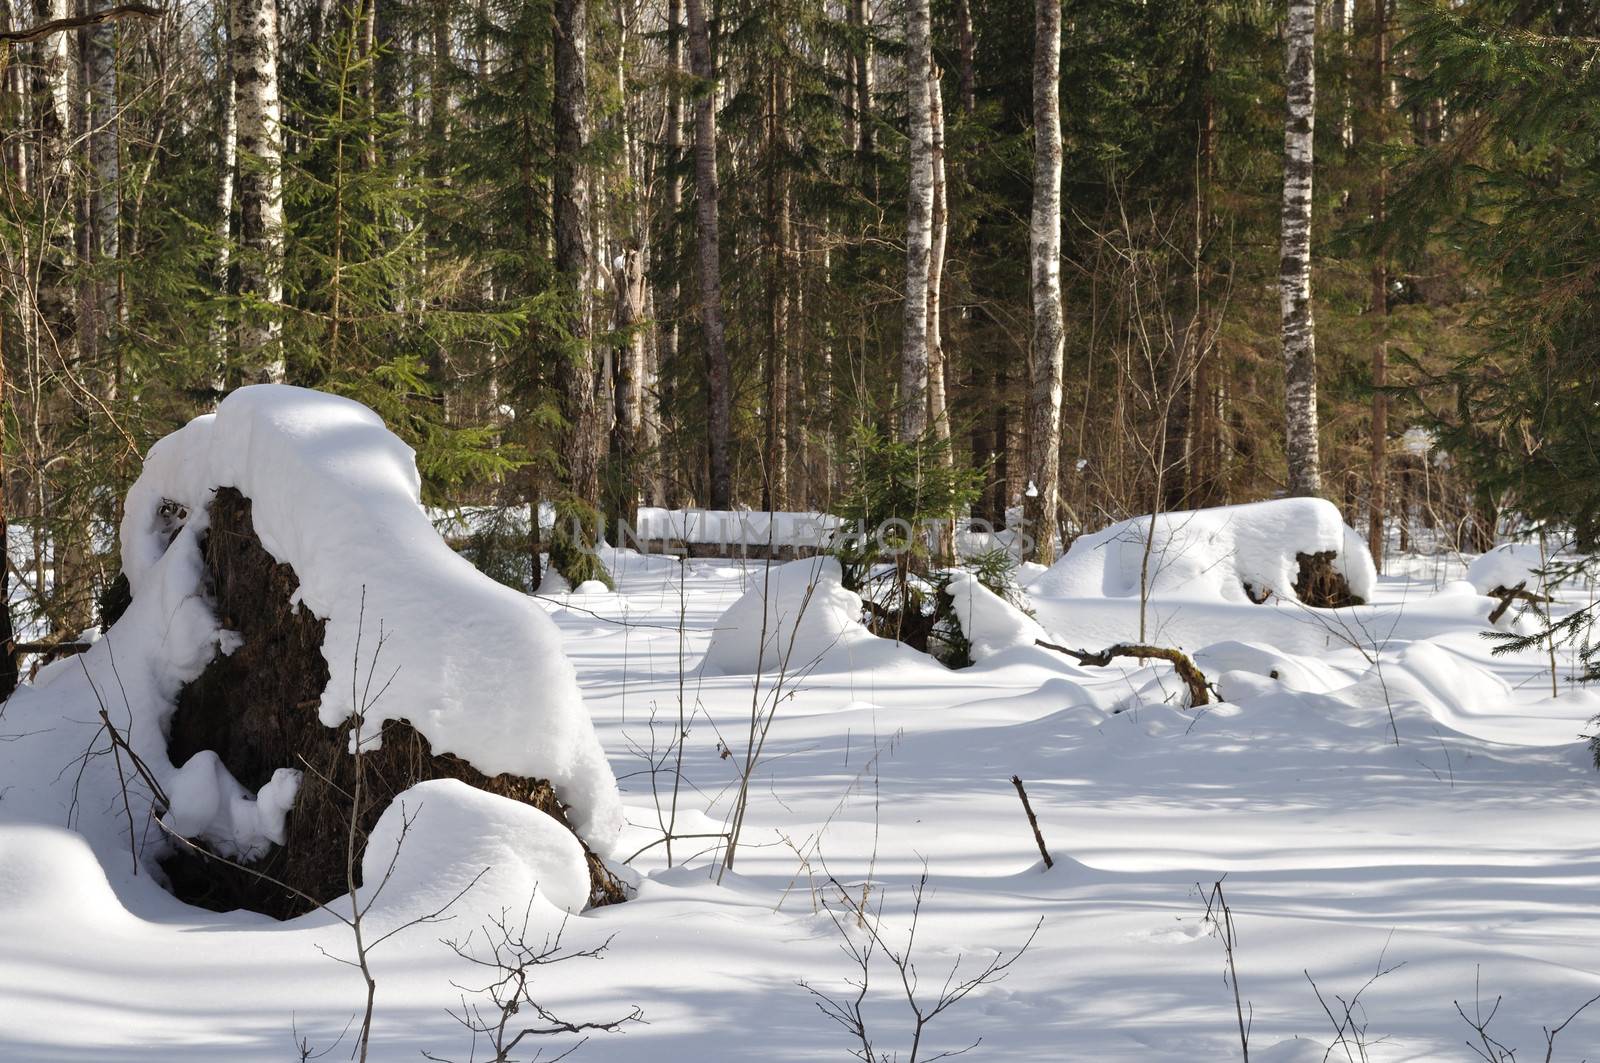 Broken trees under snow in winter forest by wander